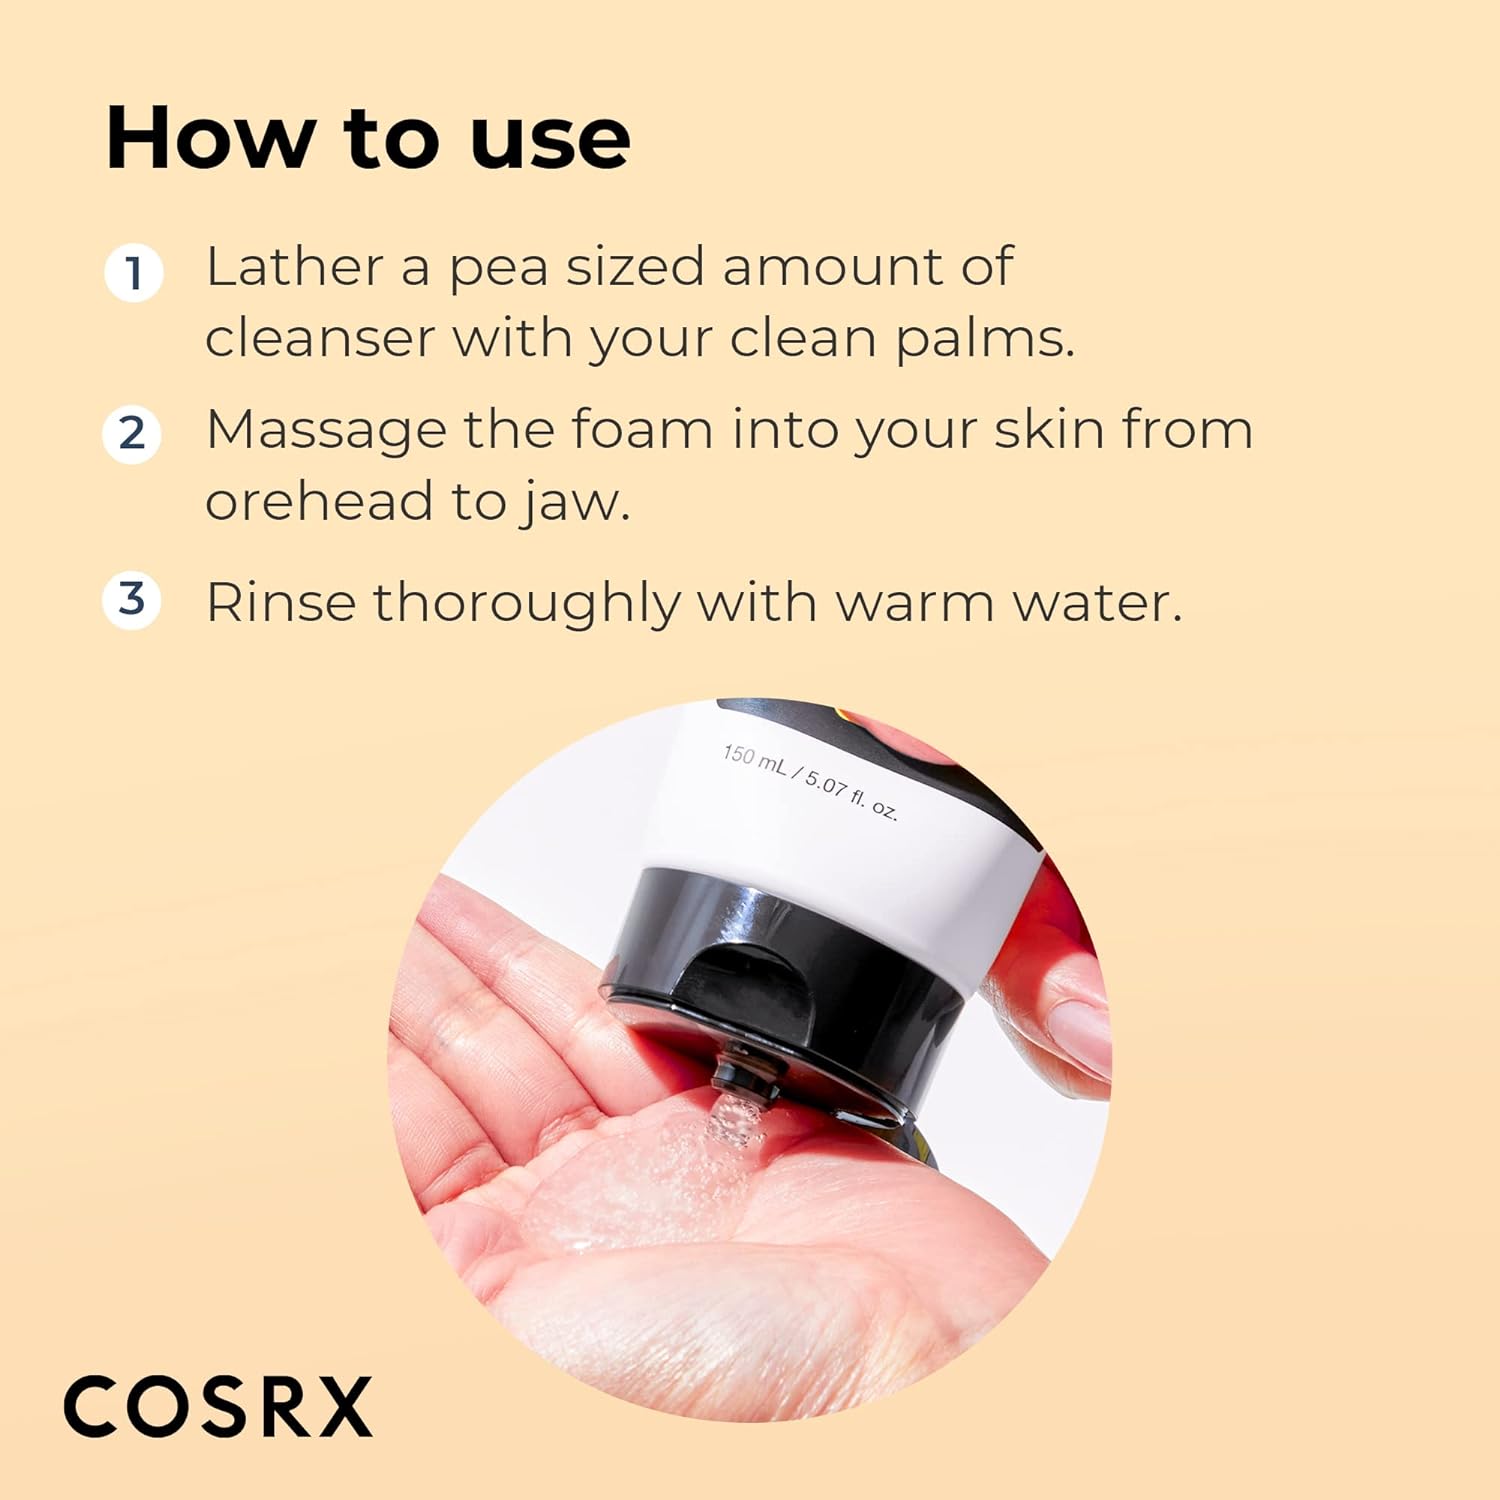 COSRX Advanced Snail Mucin Gel Cleanser 150Ml 150ml